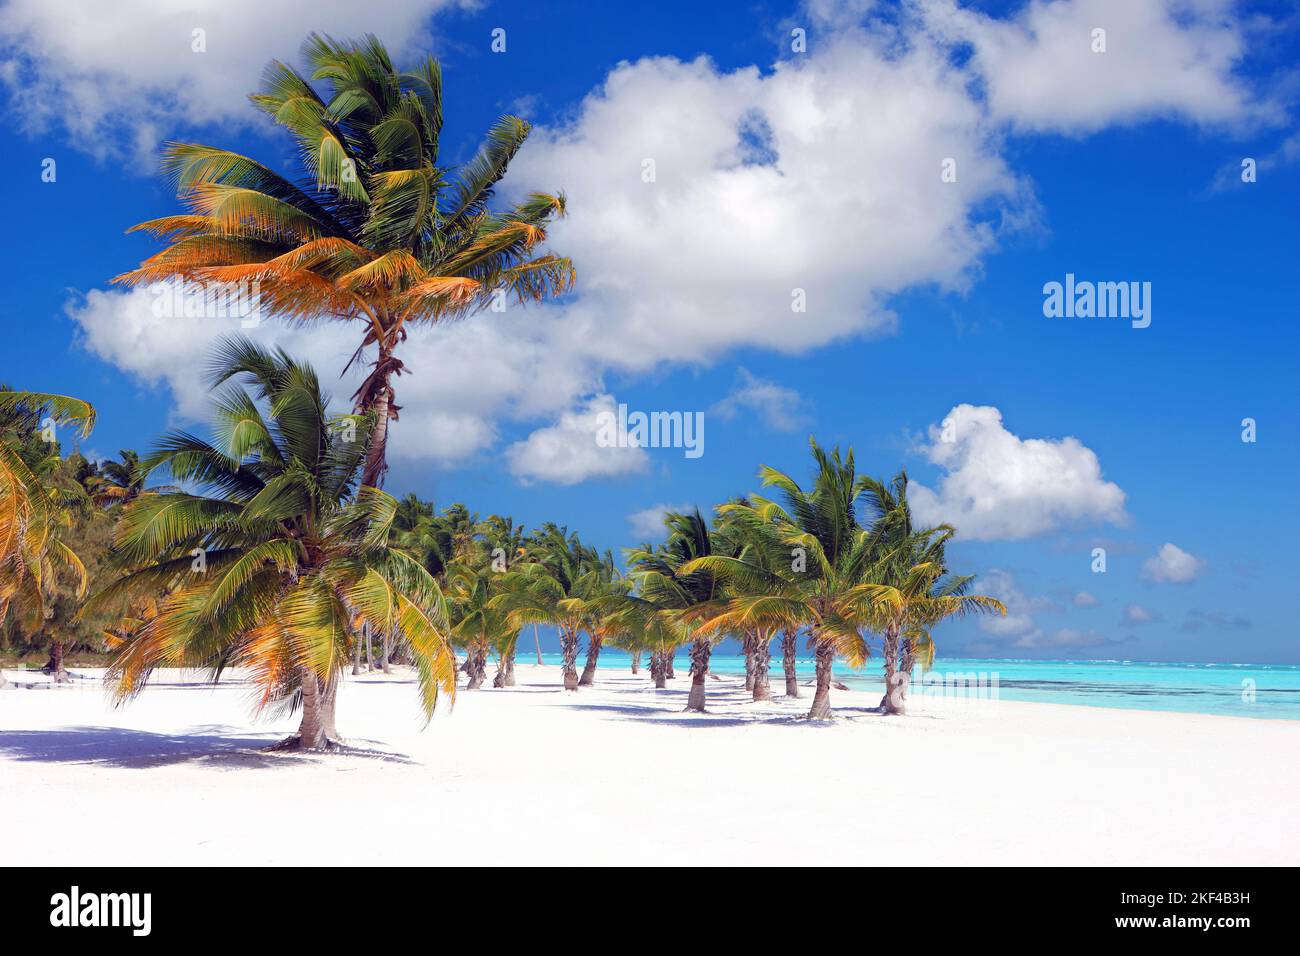 Kokospalmen am Sandstrand bei Punta Cana, Dominikanische Republik, Karibik - palma di cocco alla spiaggia vicino Punta Cana, Repubblica Dominicana, Caraibi Foto Stock